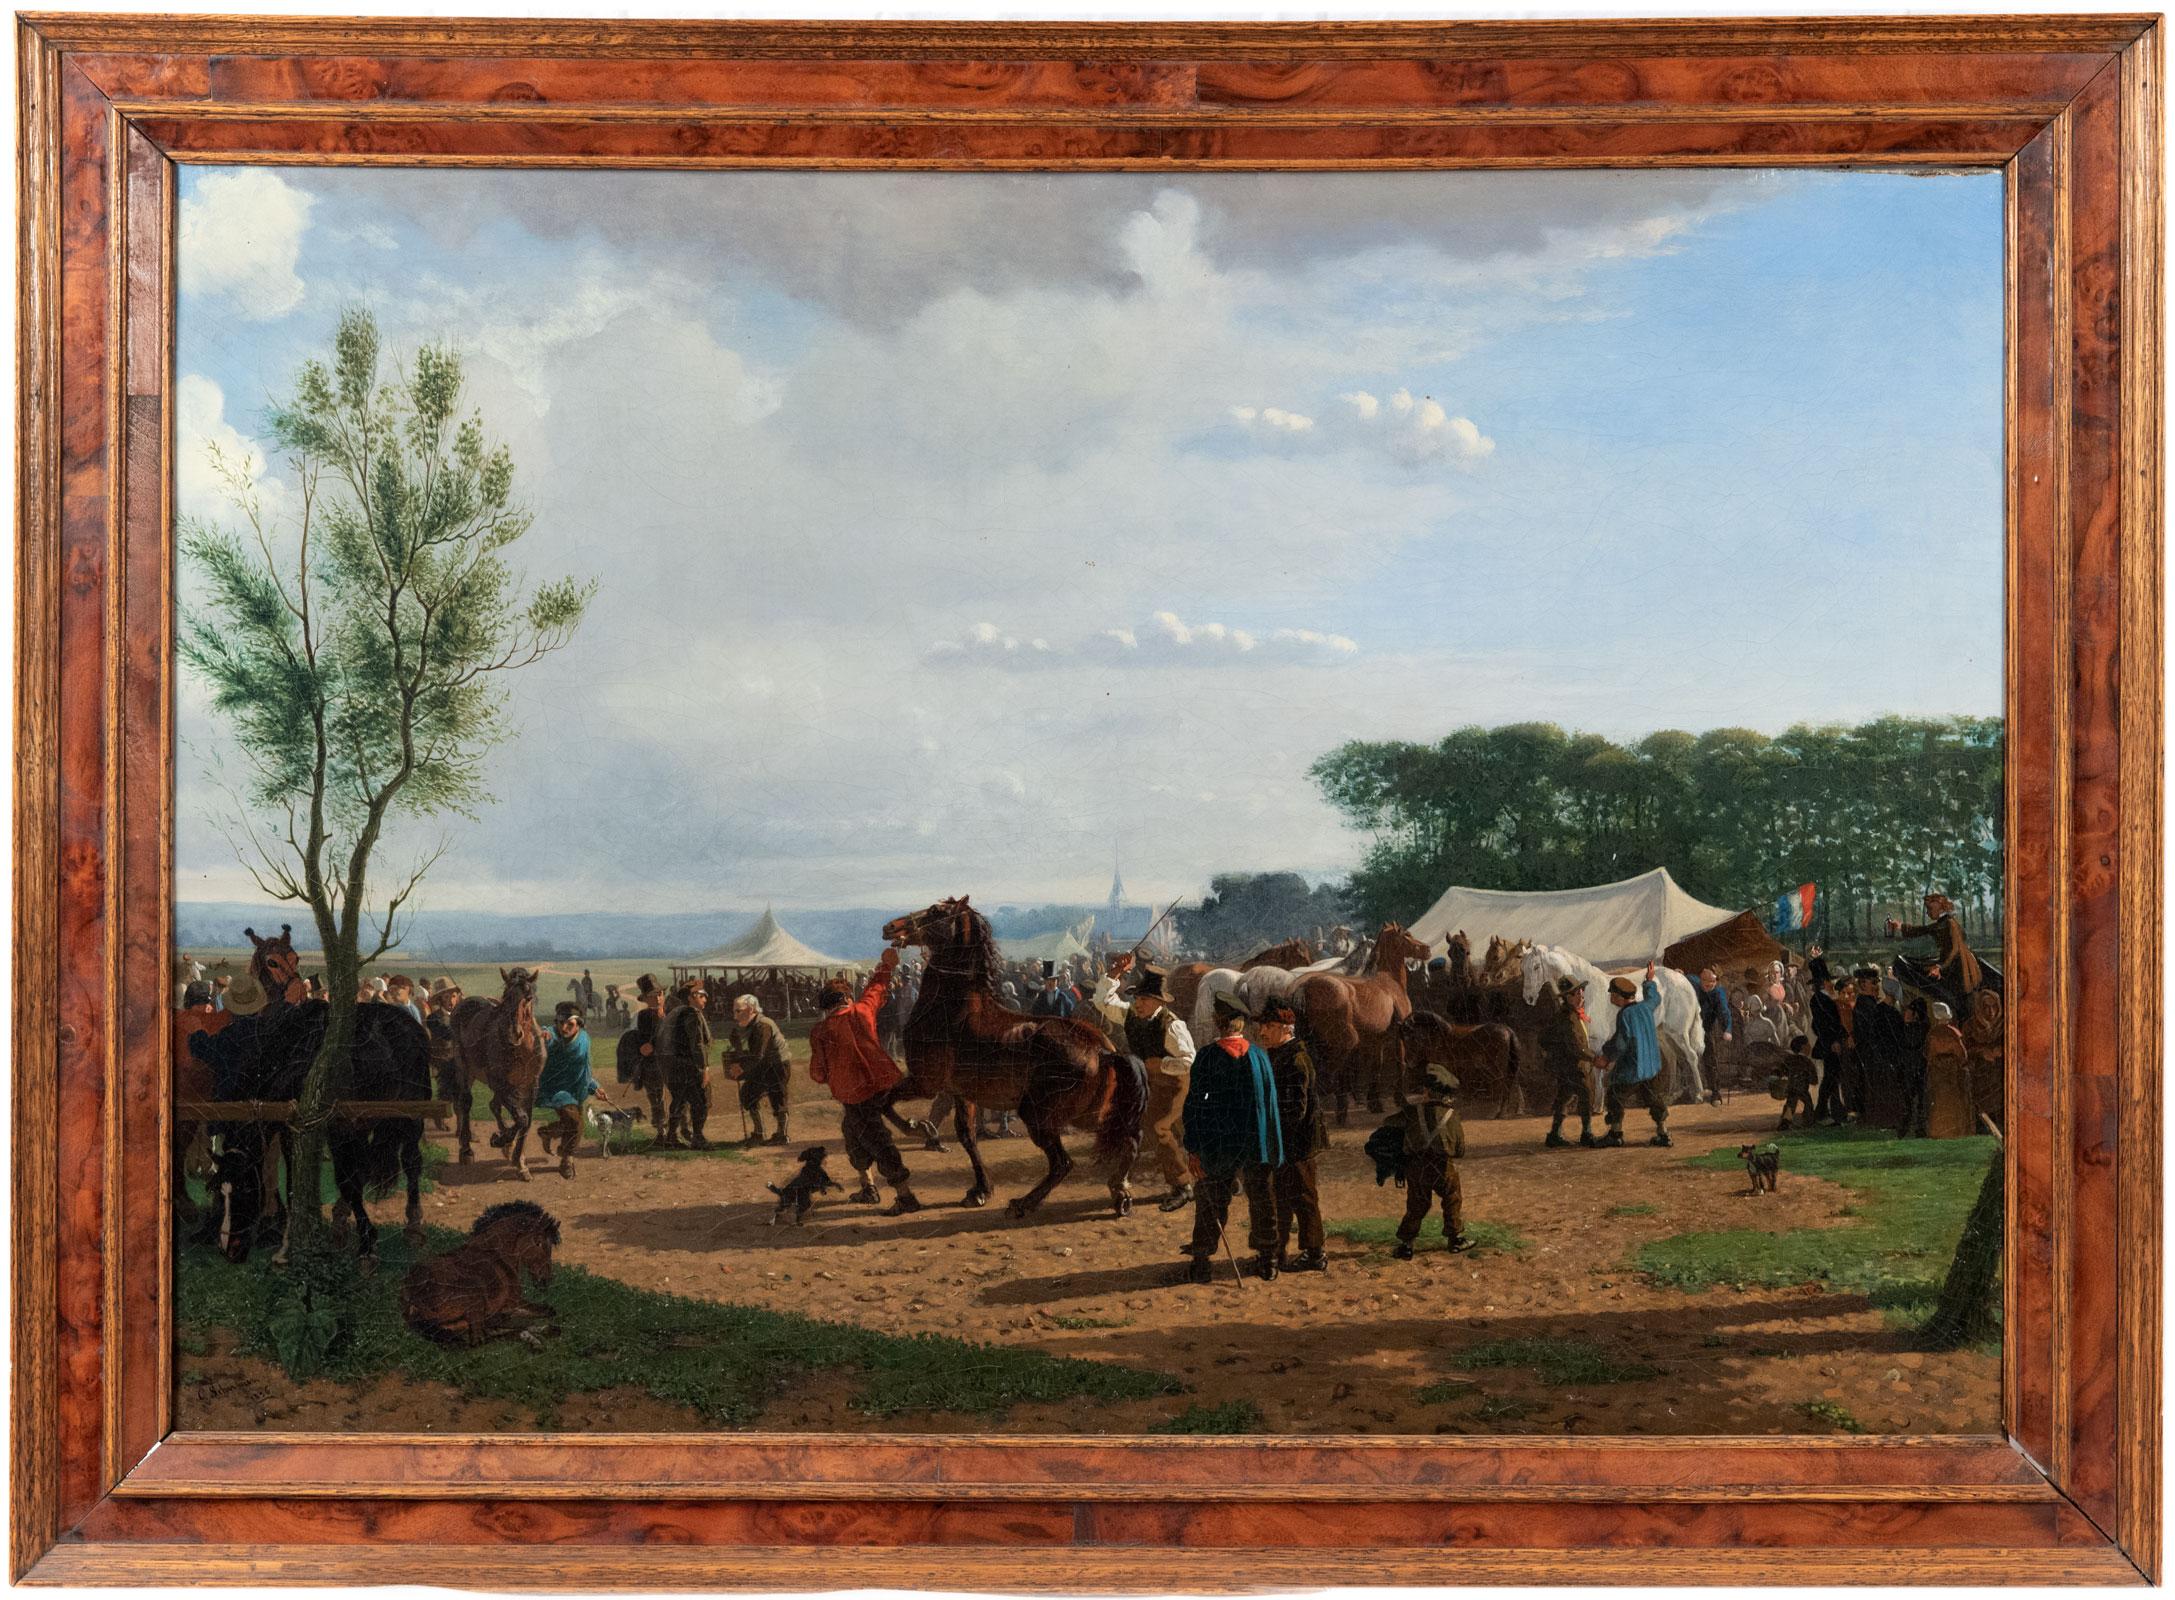 THE HORSE FAIR (1856) BY CORNELIS SCHERMER - Painting by Cornelis Albertus Johannes Schermer